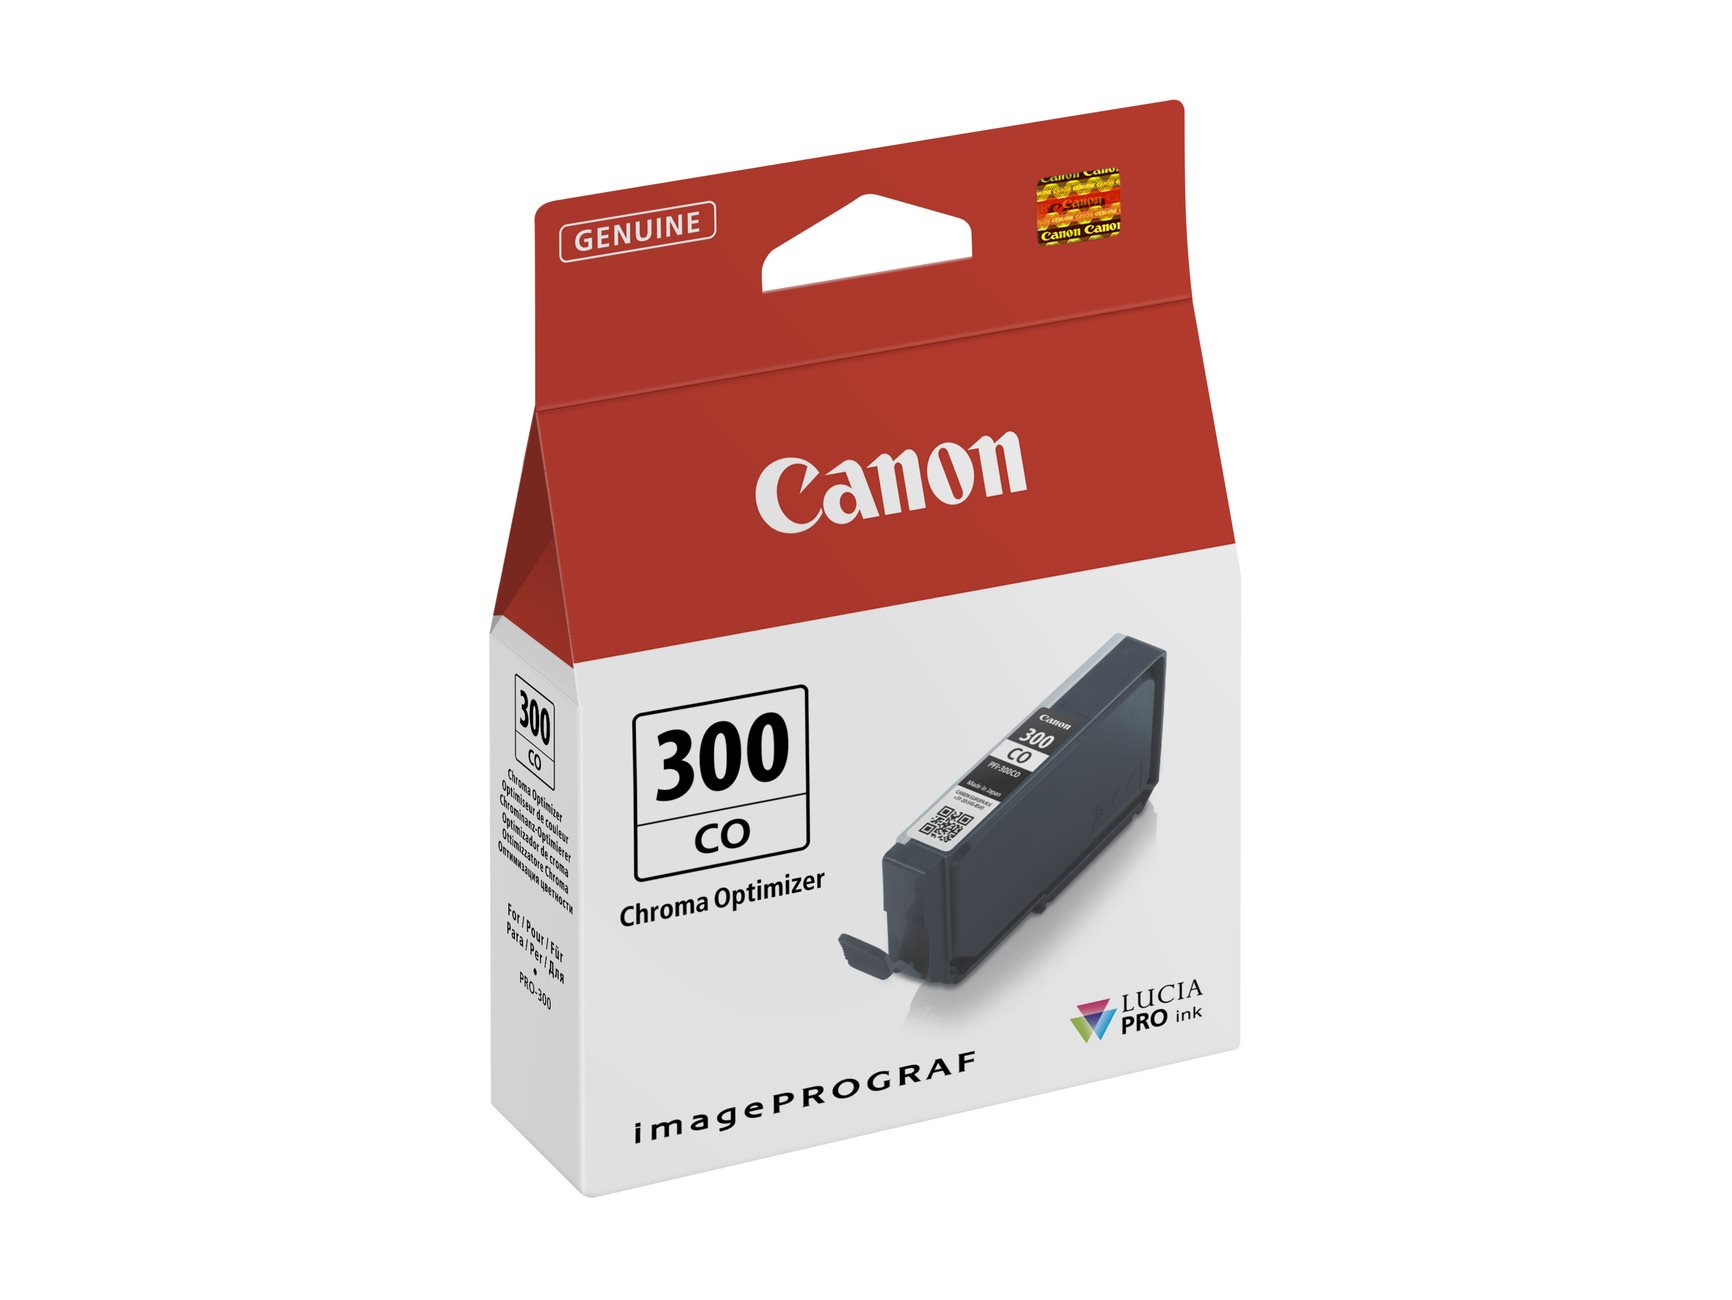 Canon BJ CARTRIDGE PFI-300 CO EUR/ OCN0 